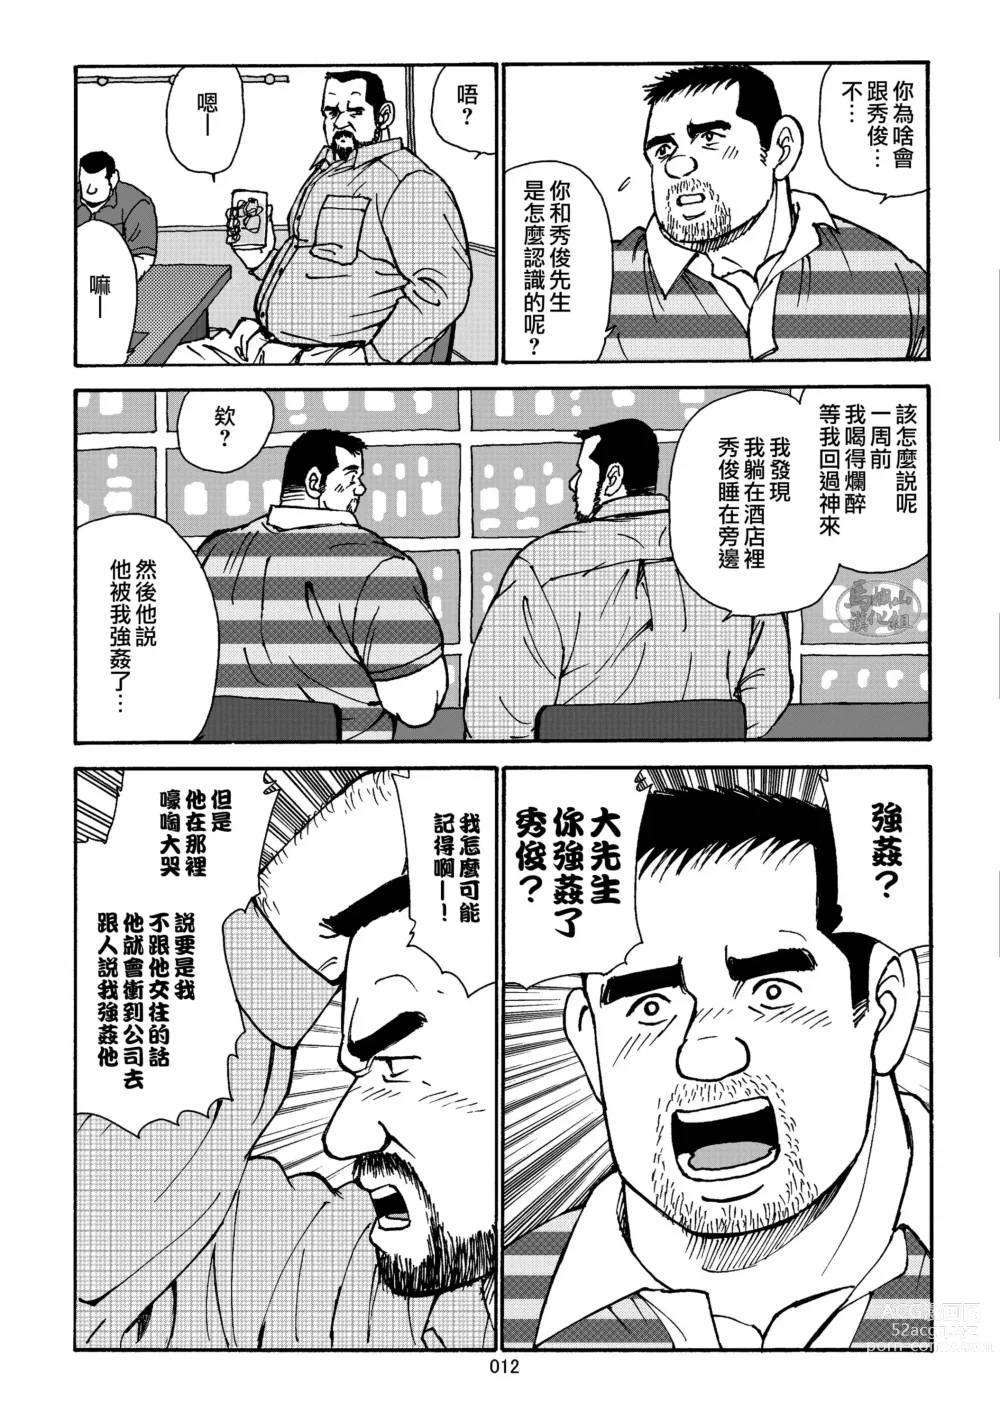 Page 12 of manga おいしい性活